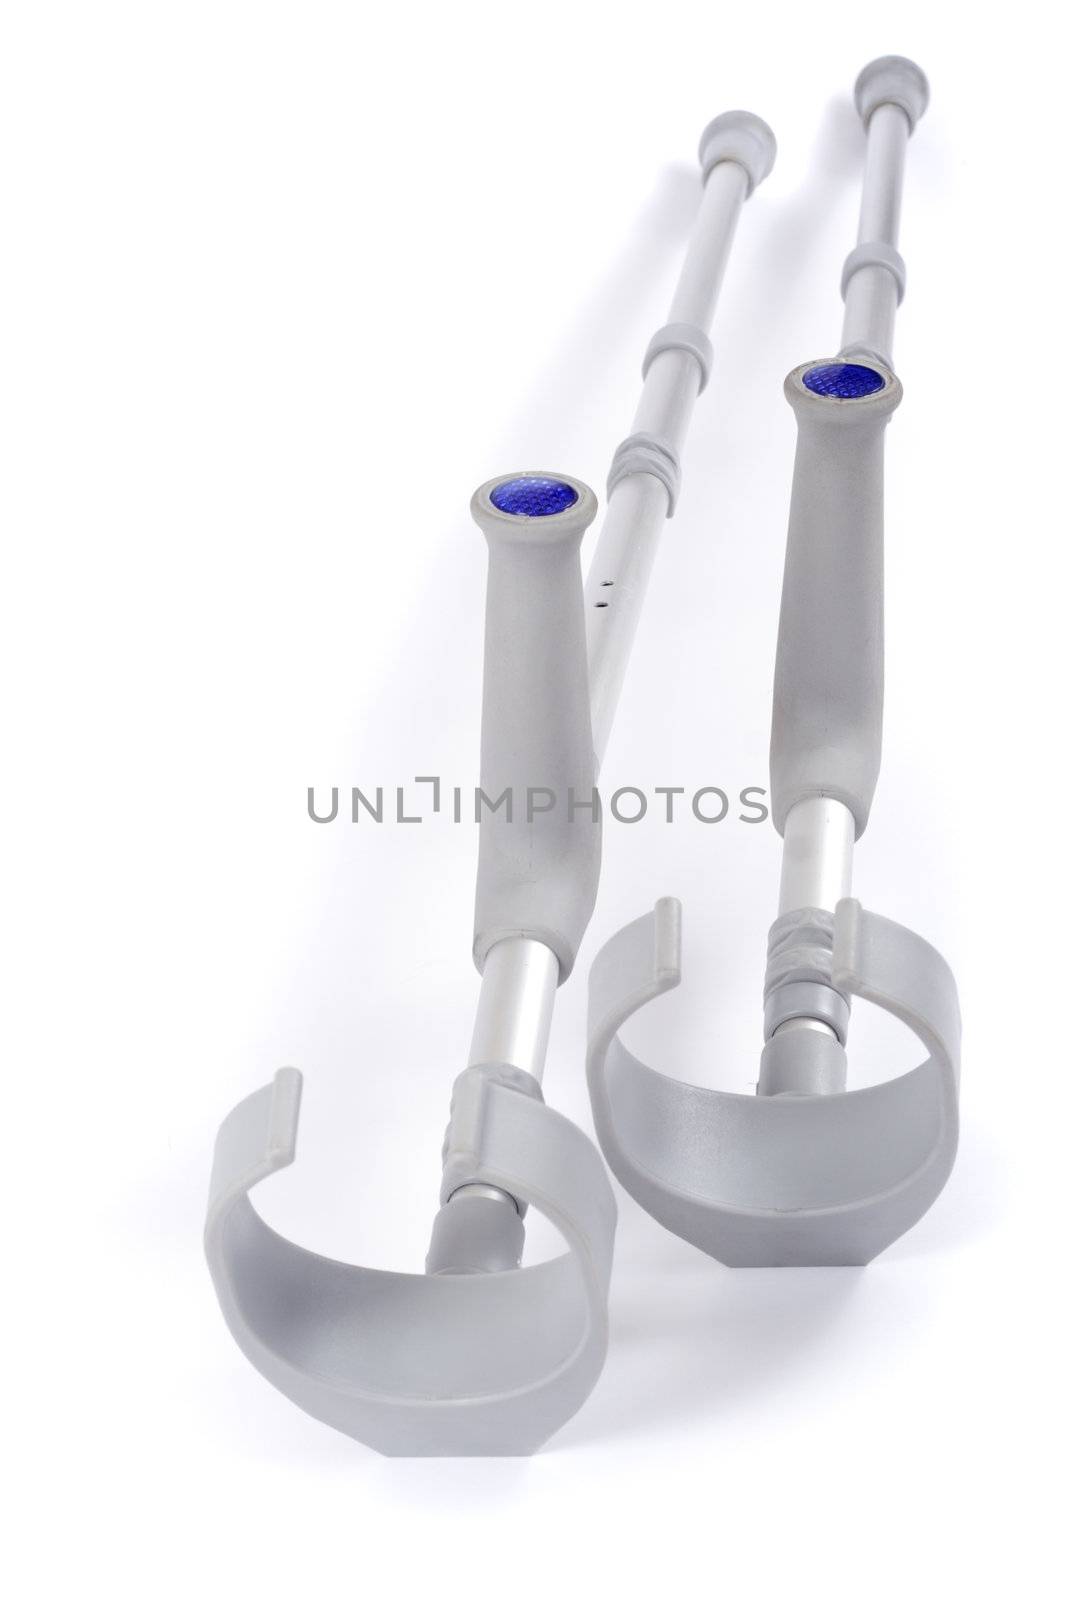 aluminum crutches photo on the white background